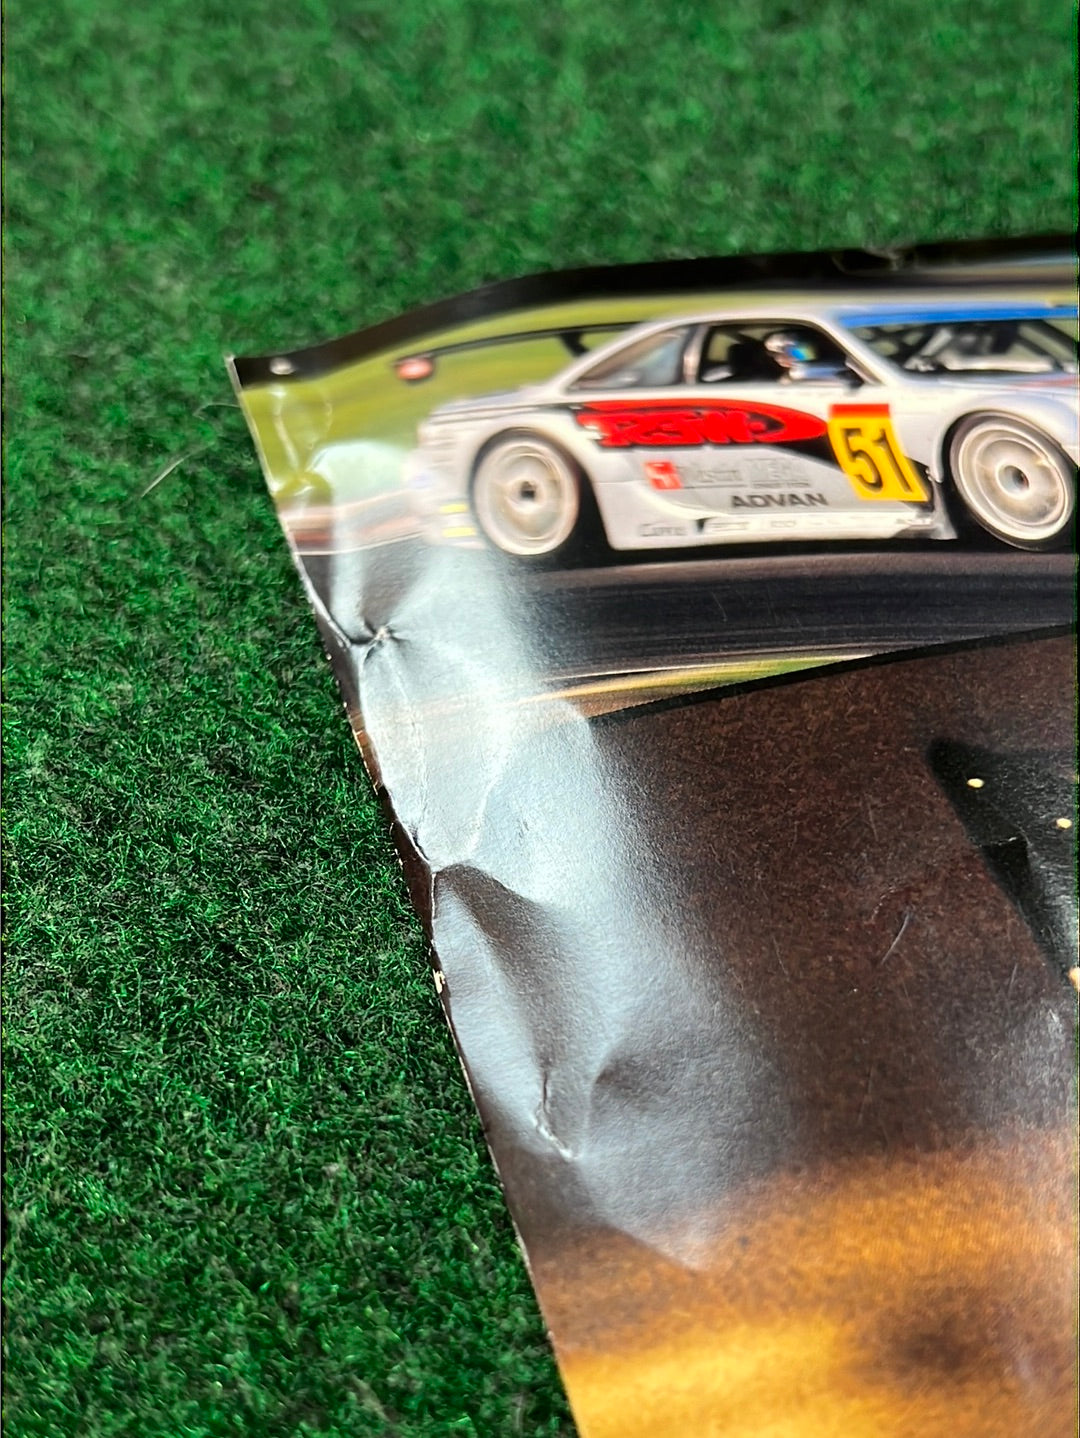 CWEST - 2001 Racing (Mazda RX7) Calendar Poster